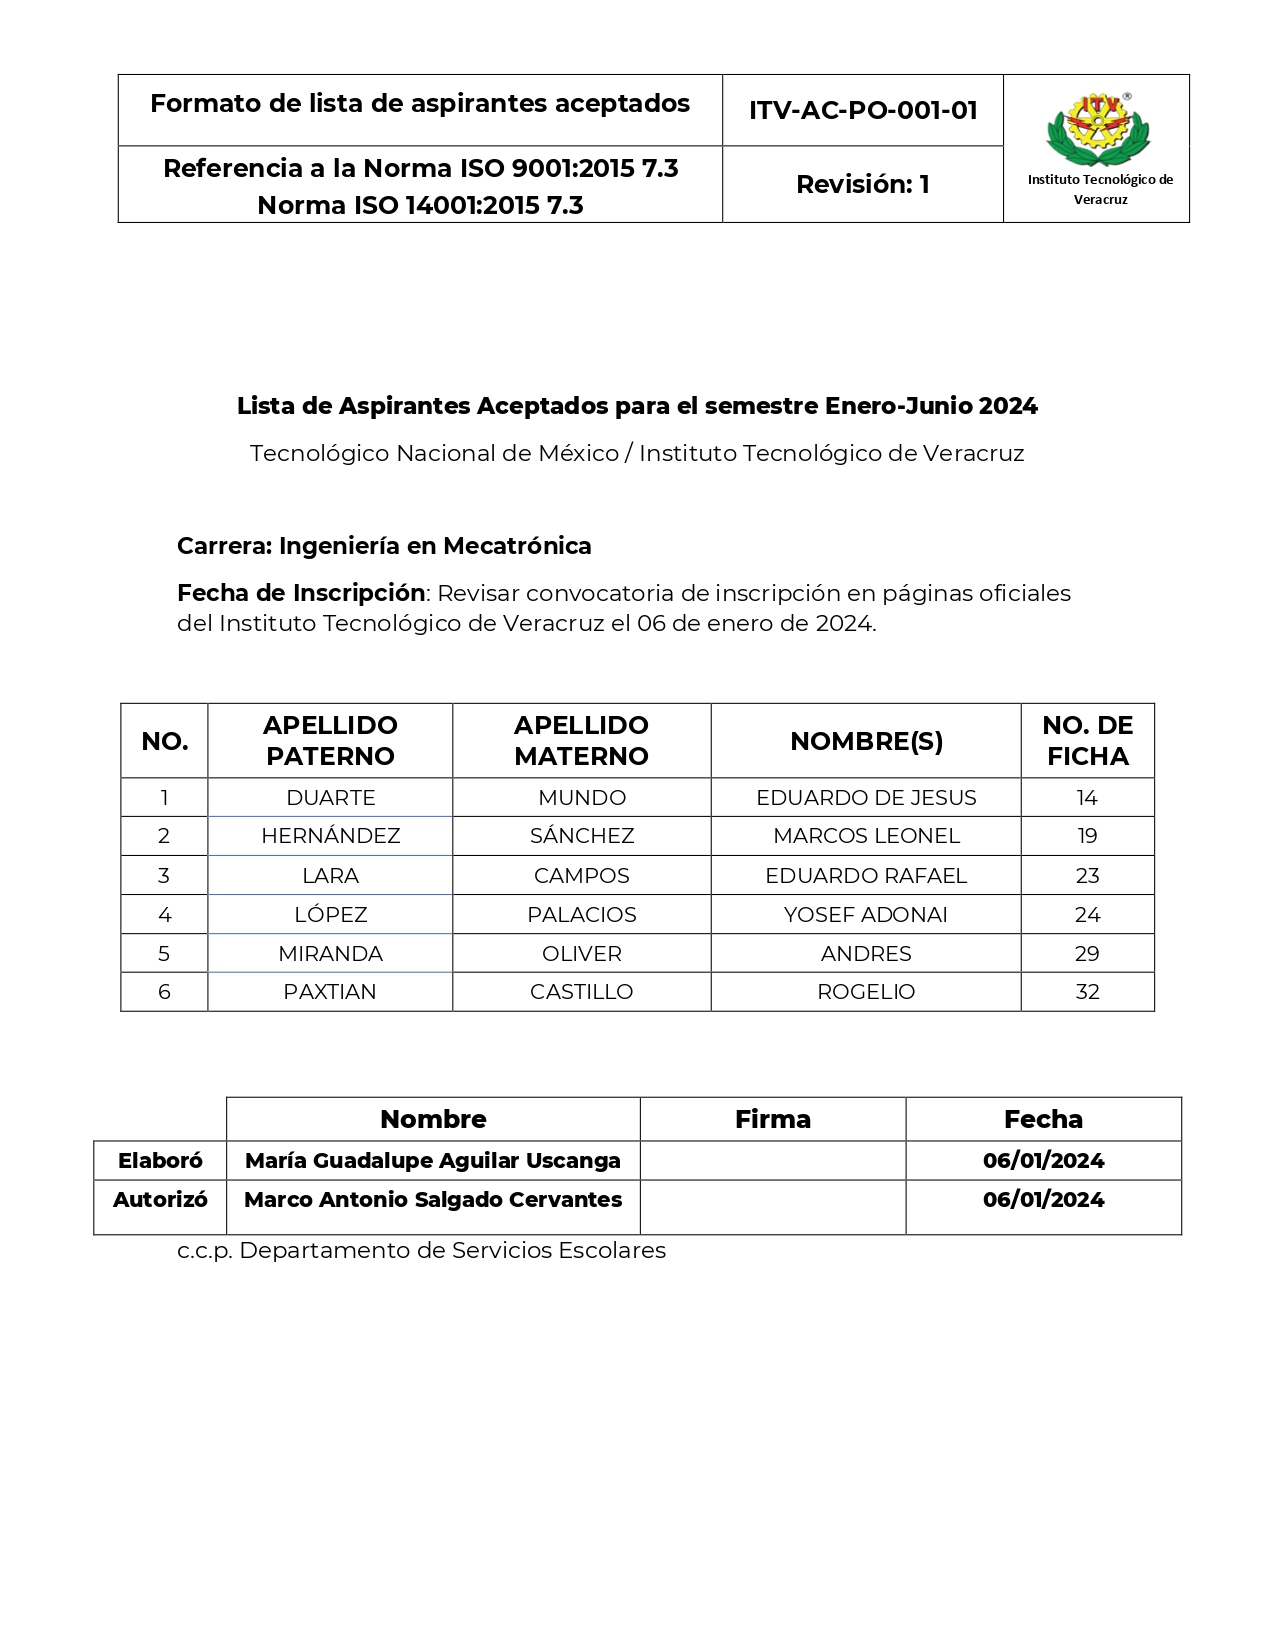 Lista_de_Aspirantes_Aceptados_por_Examen_page-0003.jpg